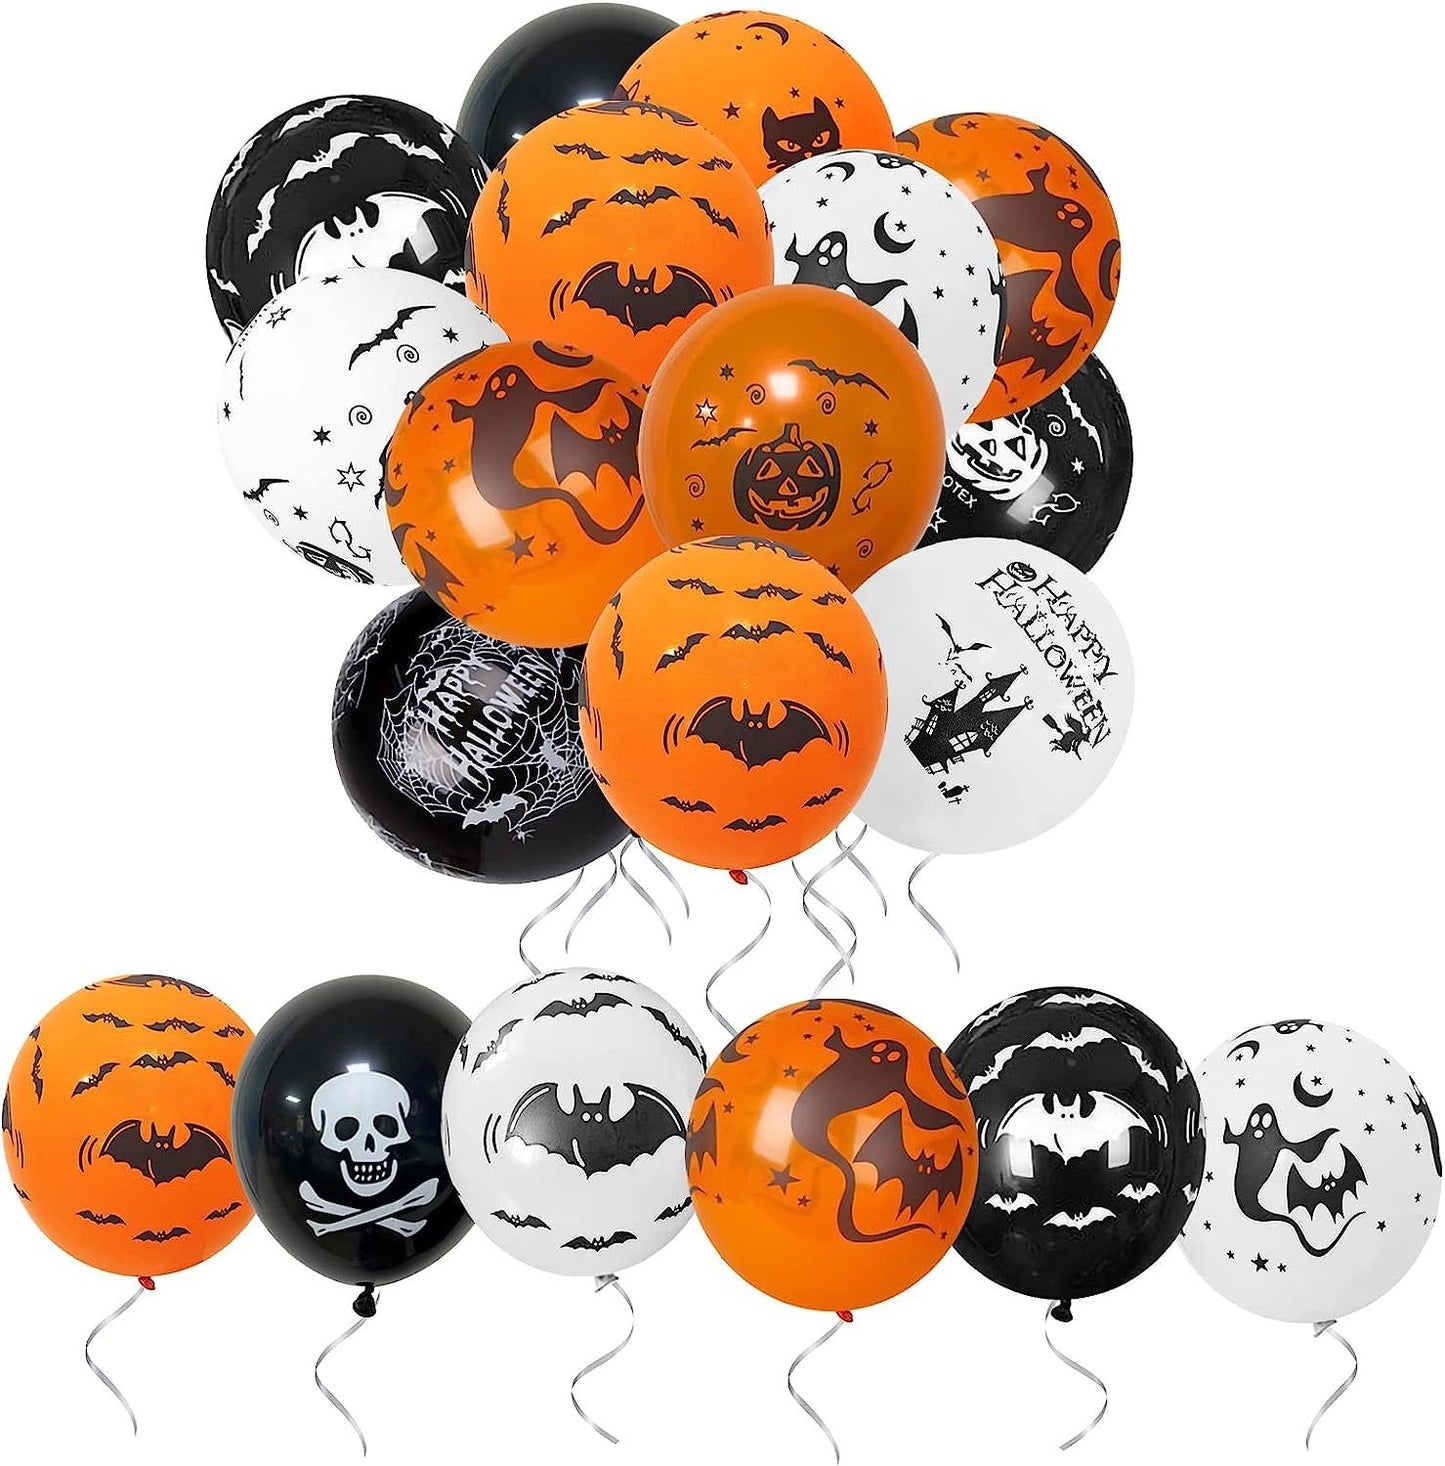 12-inch Halloween Horror Balloon Orange Black